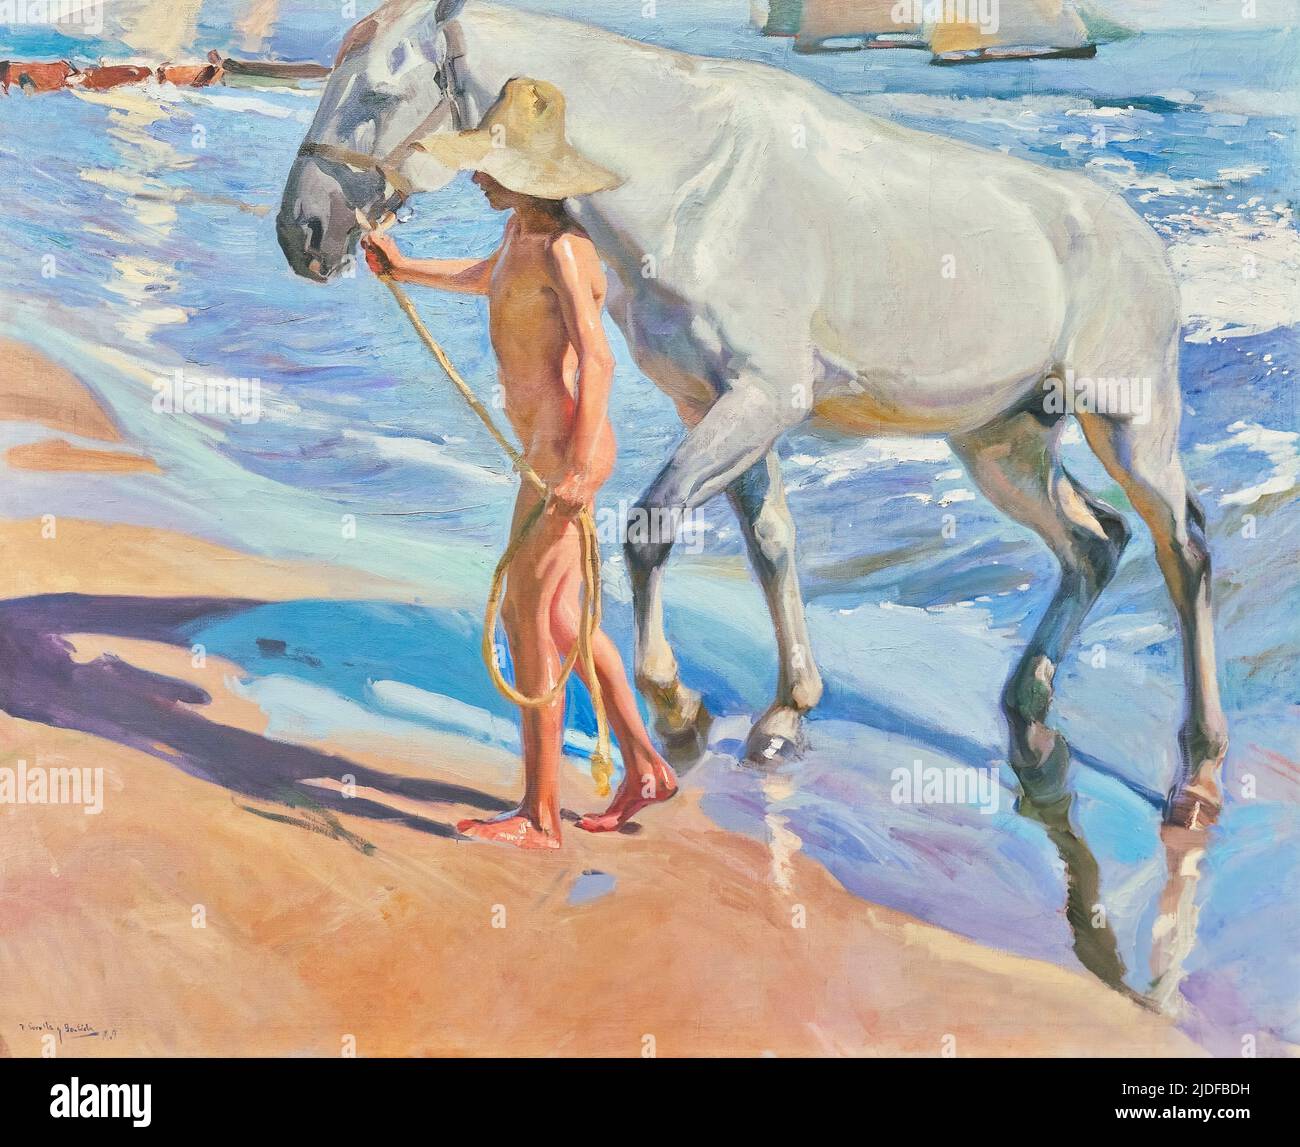 Joaquin Sorolla (1863-1923). Le bain du cheval. (El bano del caballo). 1909. Huile sur toile. 205 x 250 cm. Joaquin Sorolla y Bastida était une douleur espagnole Banque D'Images